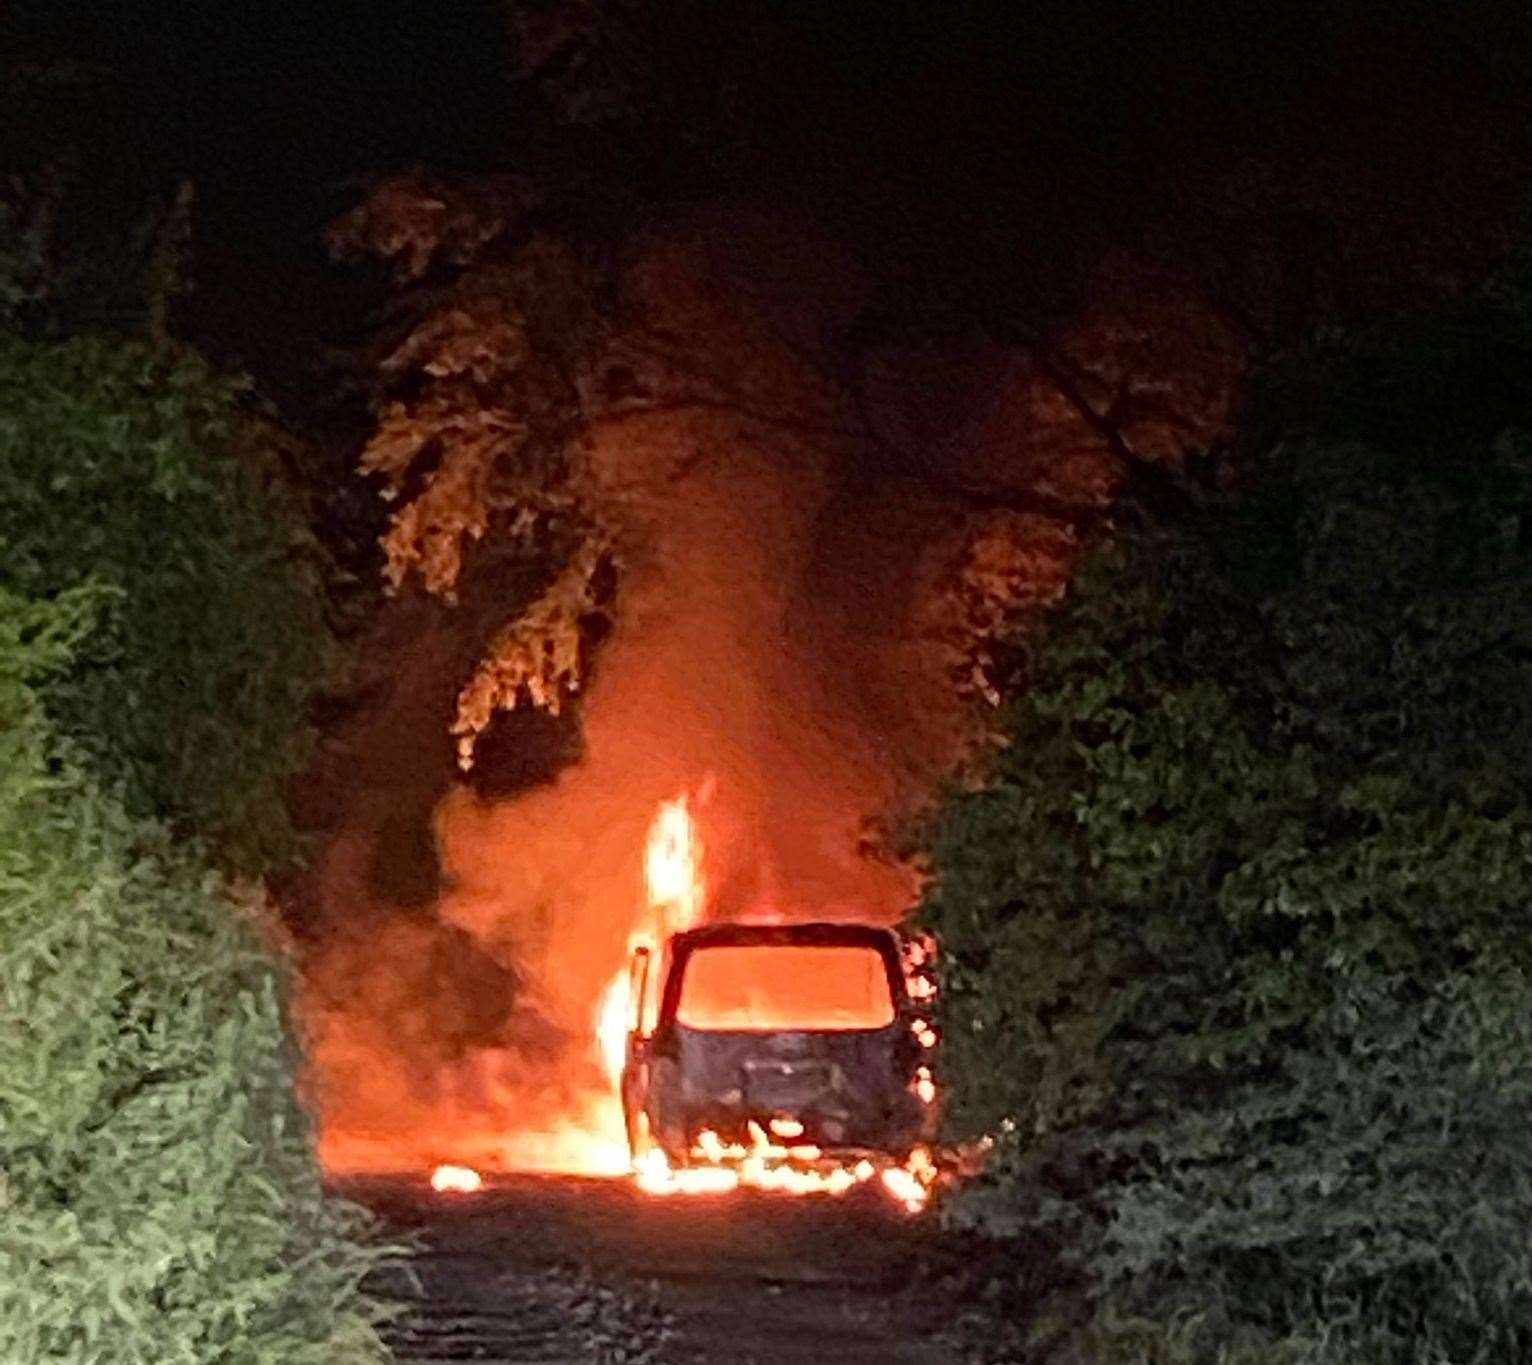 A van was set on fire in Pilgrims Road, Halling. Picture by Scott Pierce